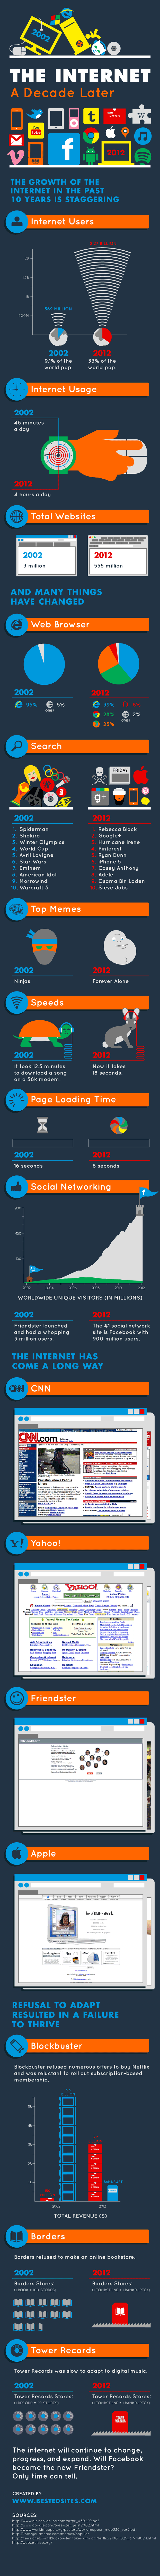 Internet 2002 - 2012